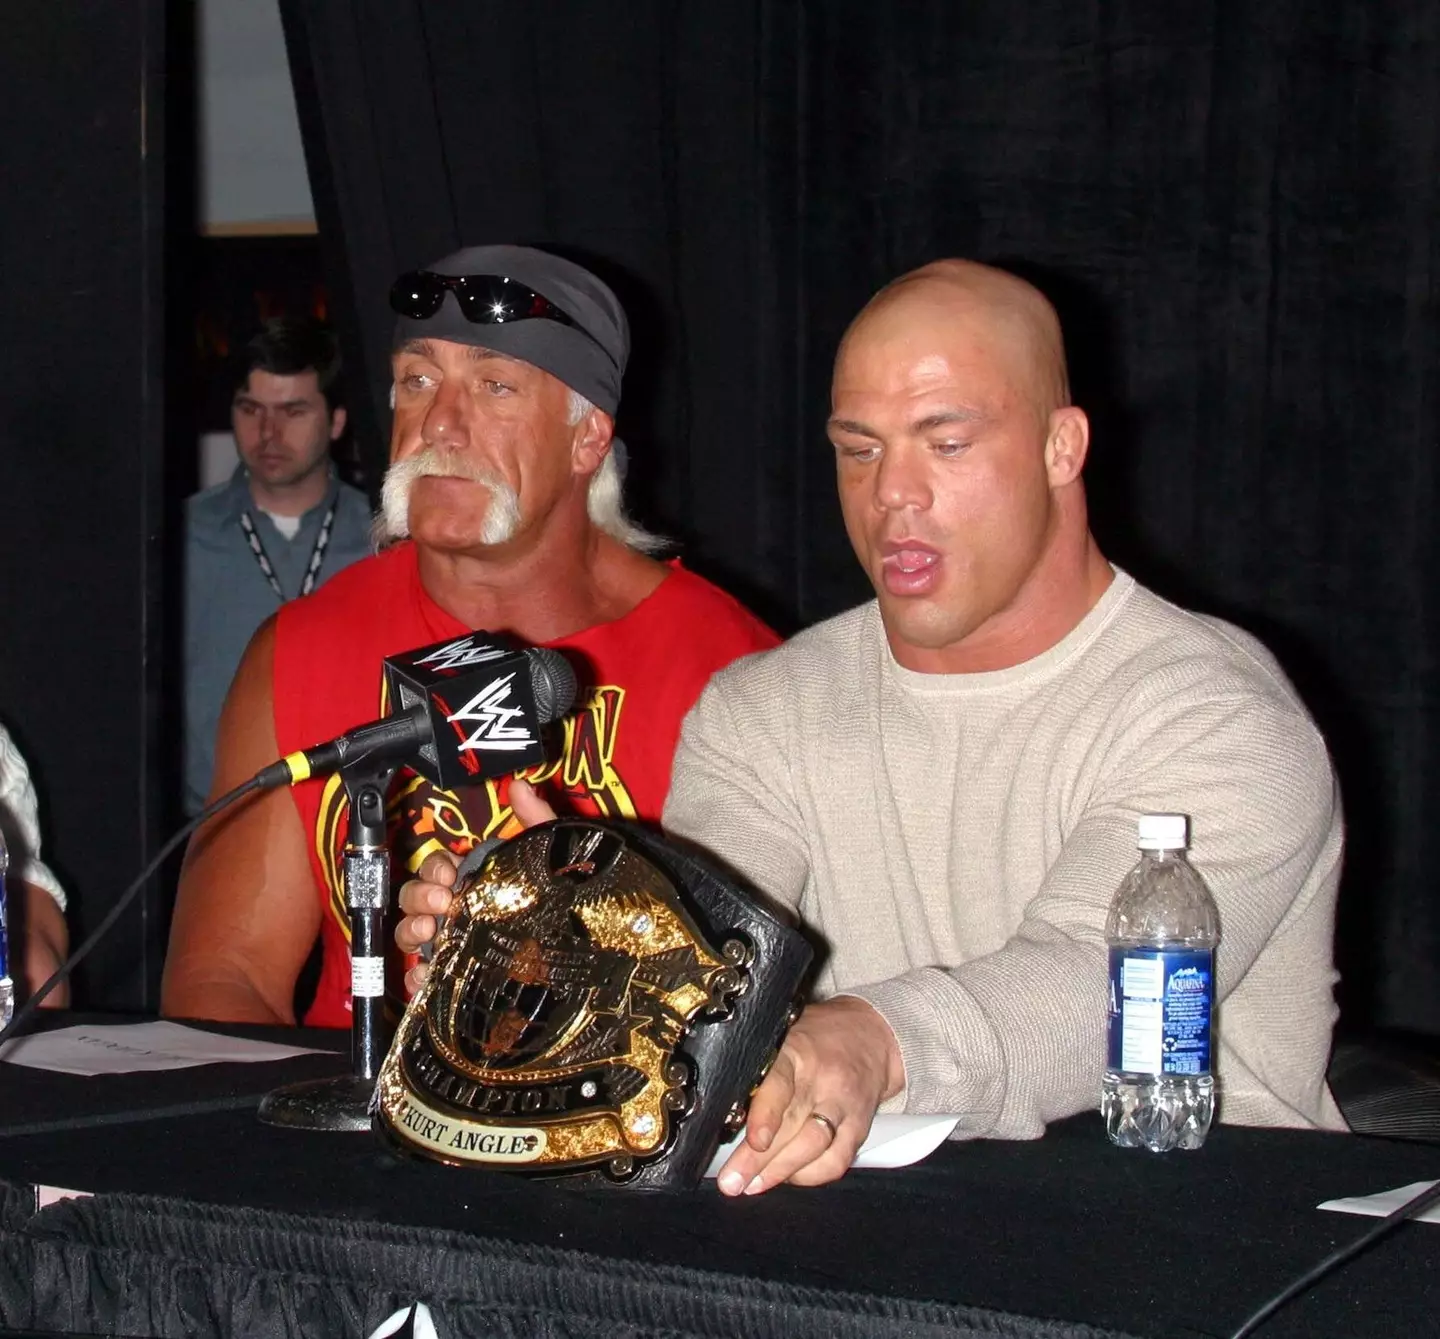 Hull Hogan with Kurt Angle in 2004.